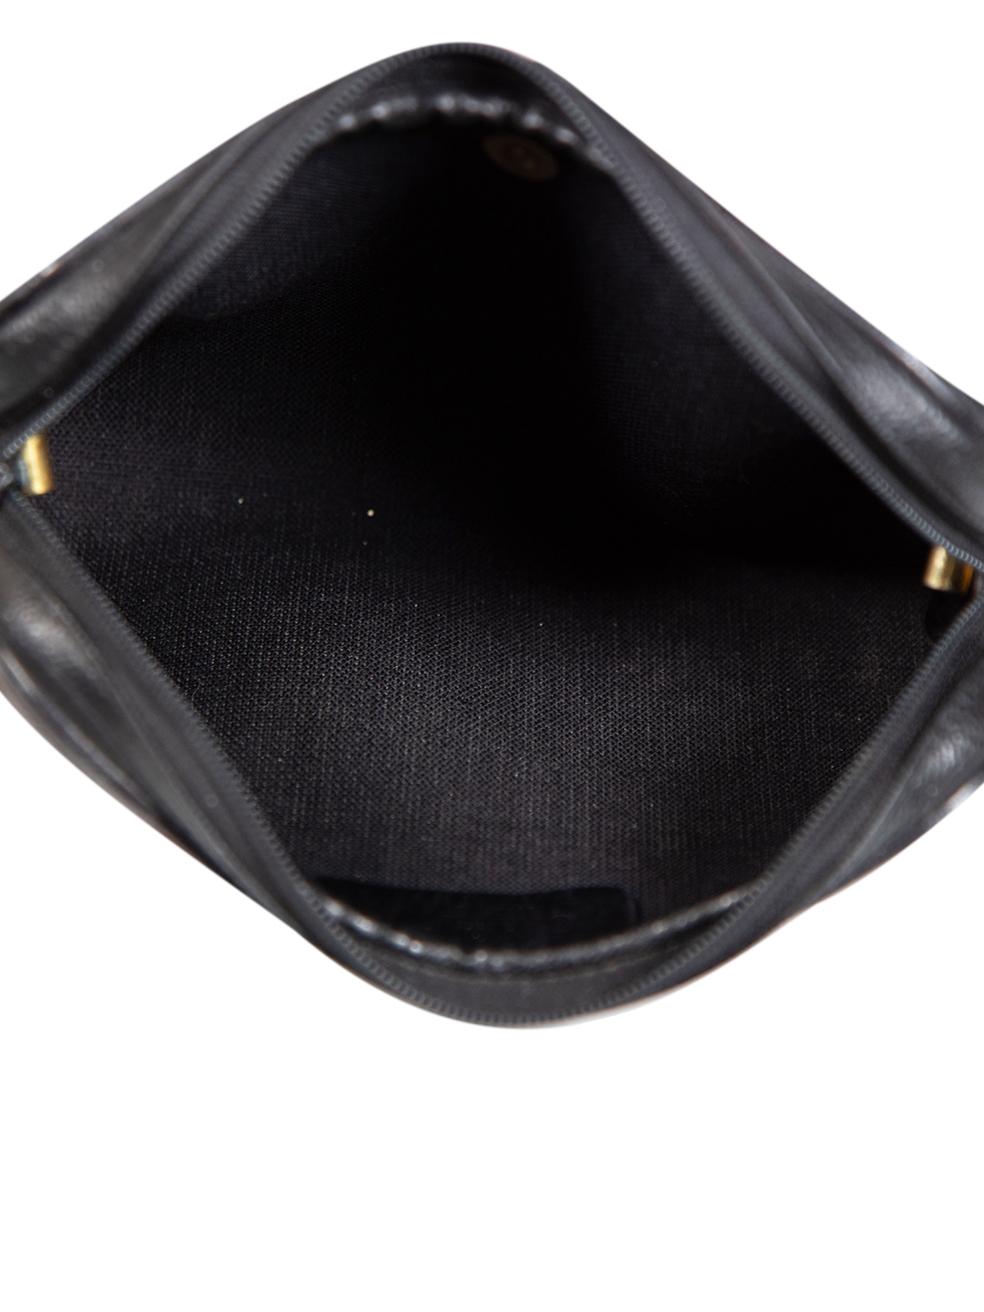 Dior Black Honeycomb Leather Crossbody Bag For Sale 1